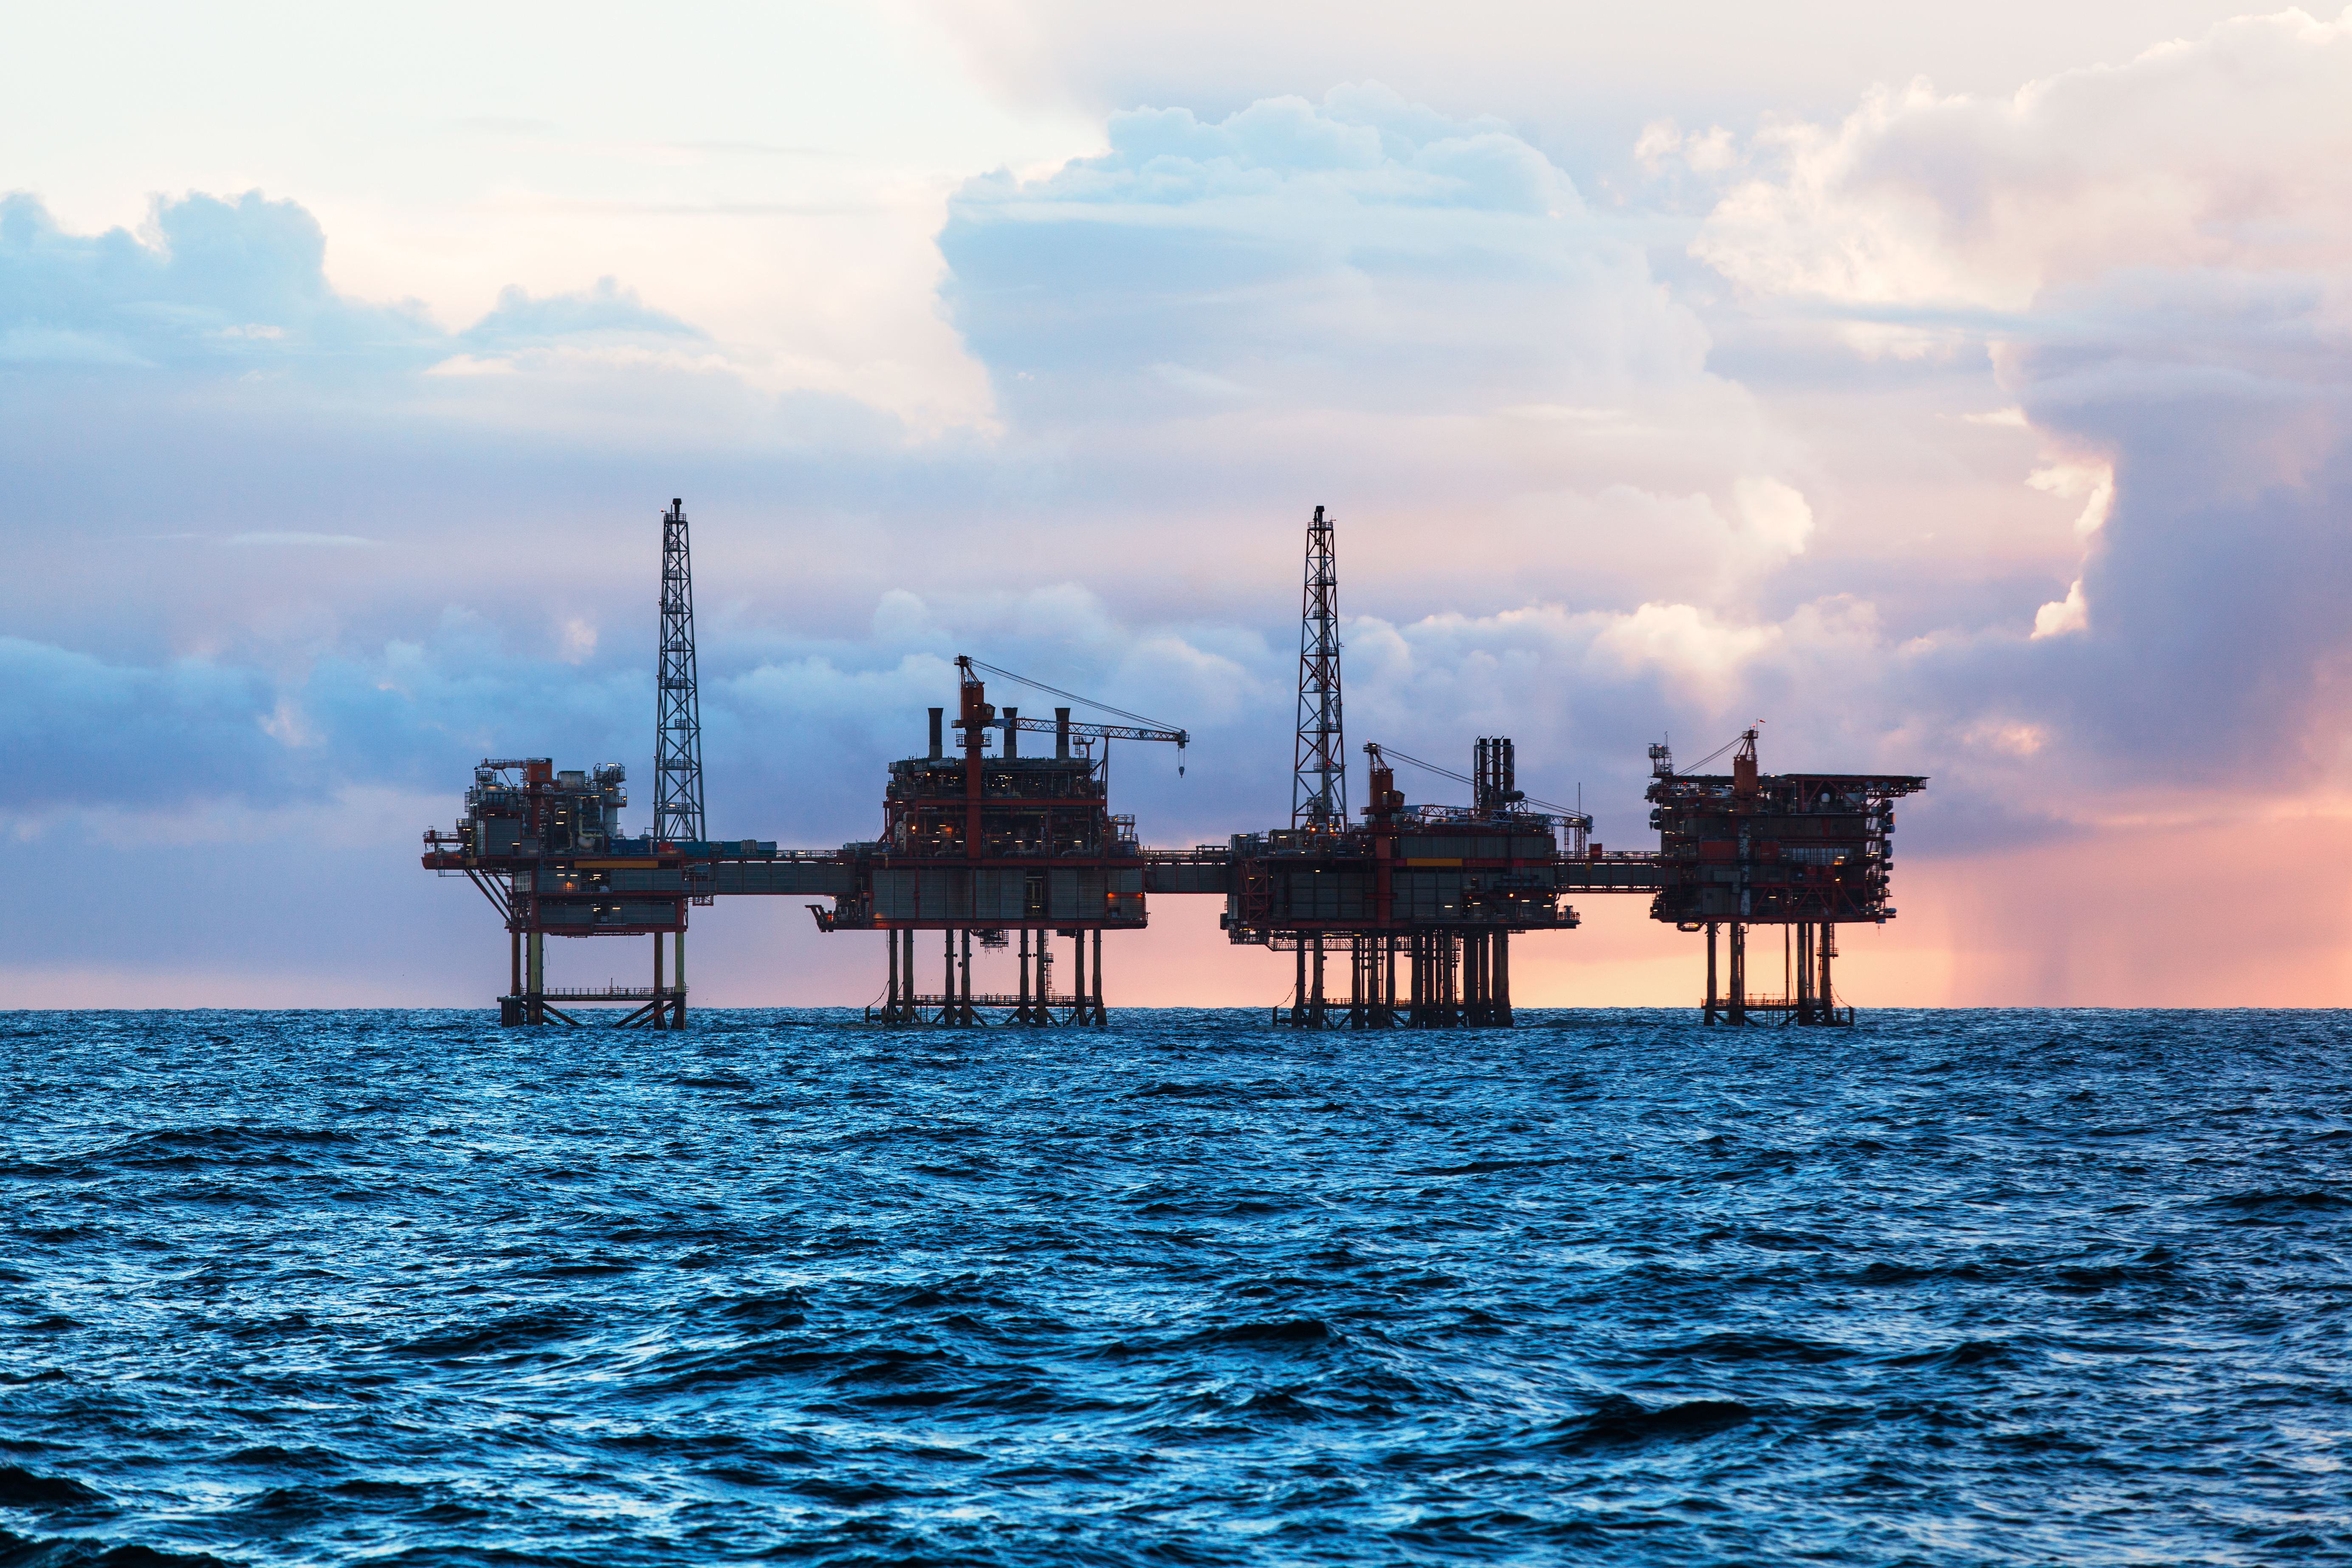 Offshore oil rig at sunset. (Shutterstock/Lukasz Z)